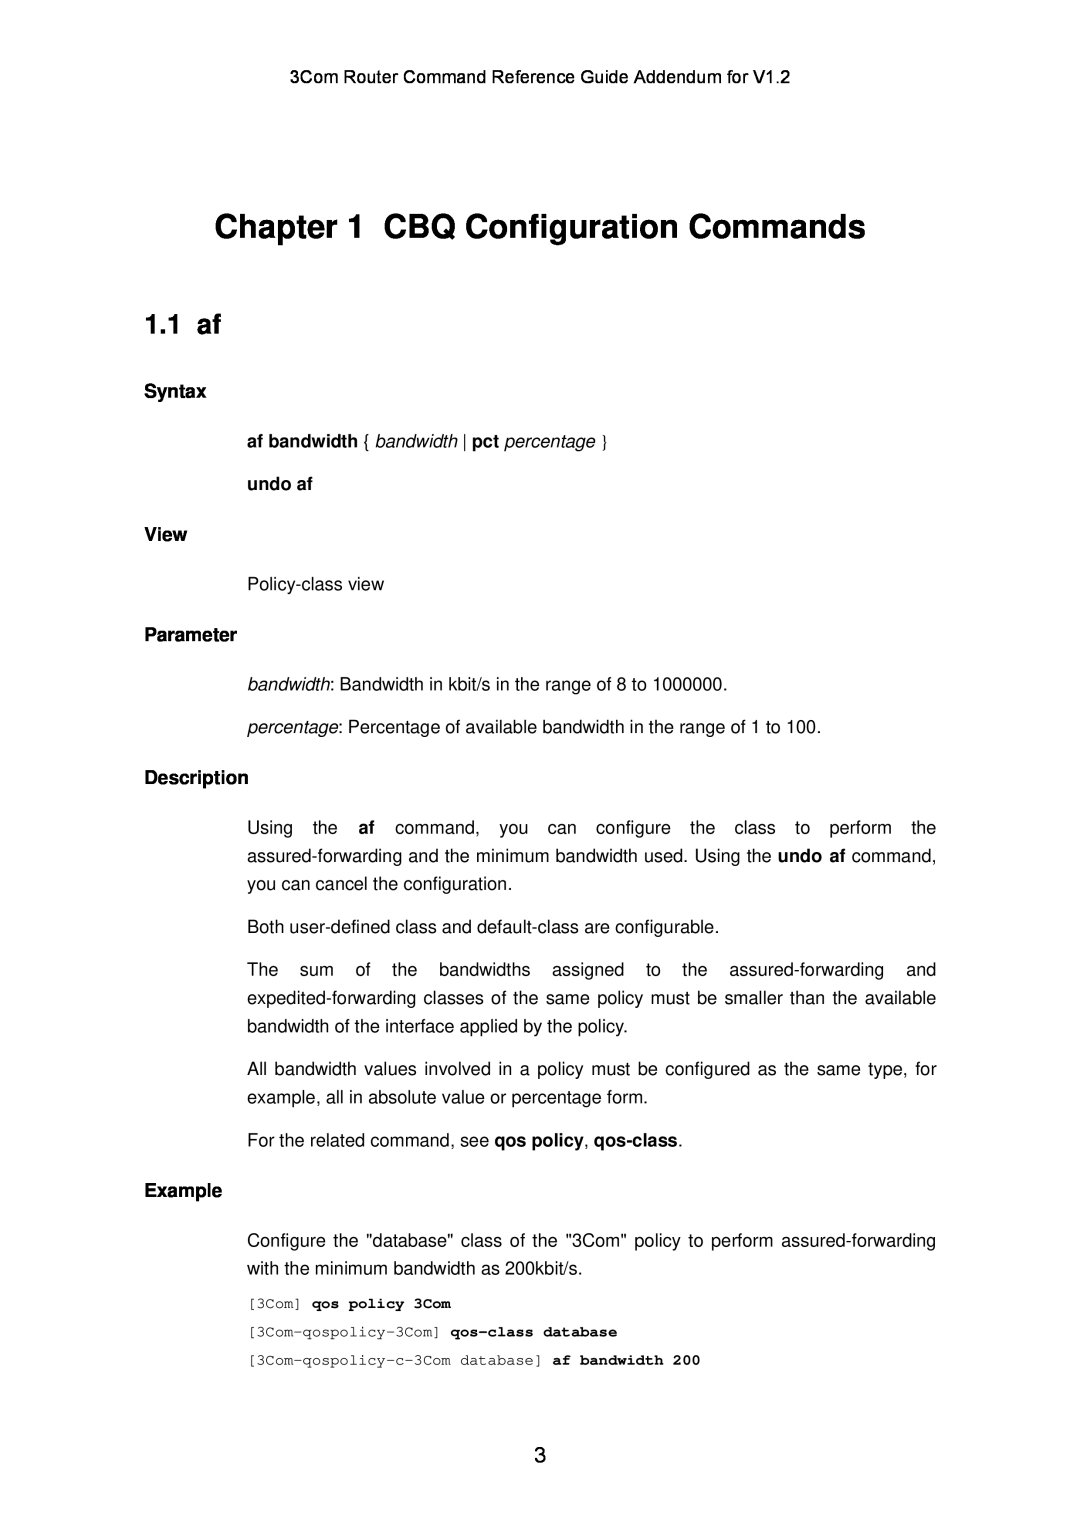 3Com 10014302 manual CBQ Configuration Commands, 1.1 af, Syntax, View, Parameter, Description, Example, undo af 